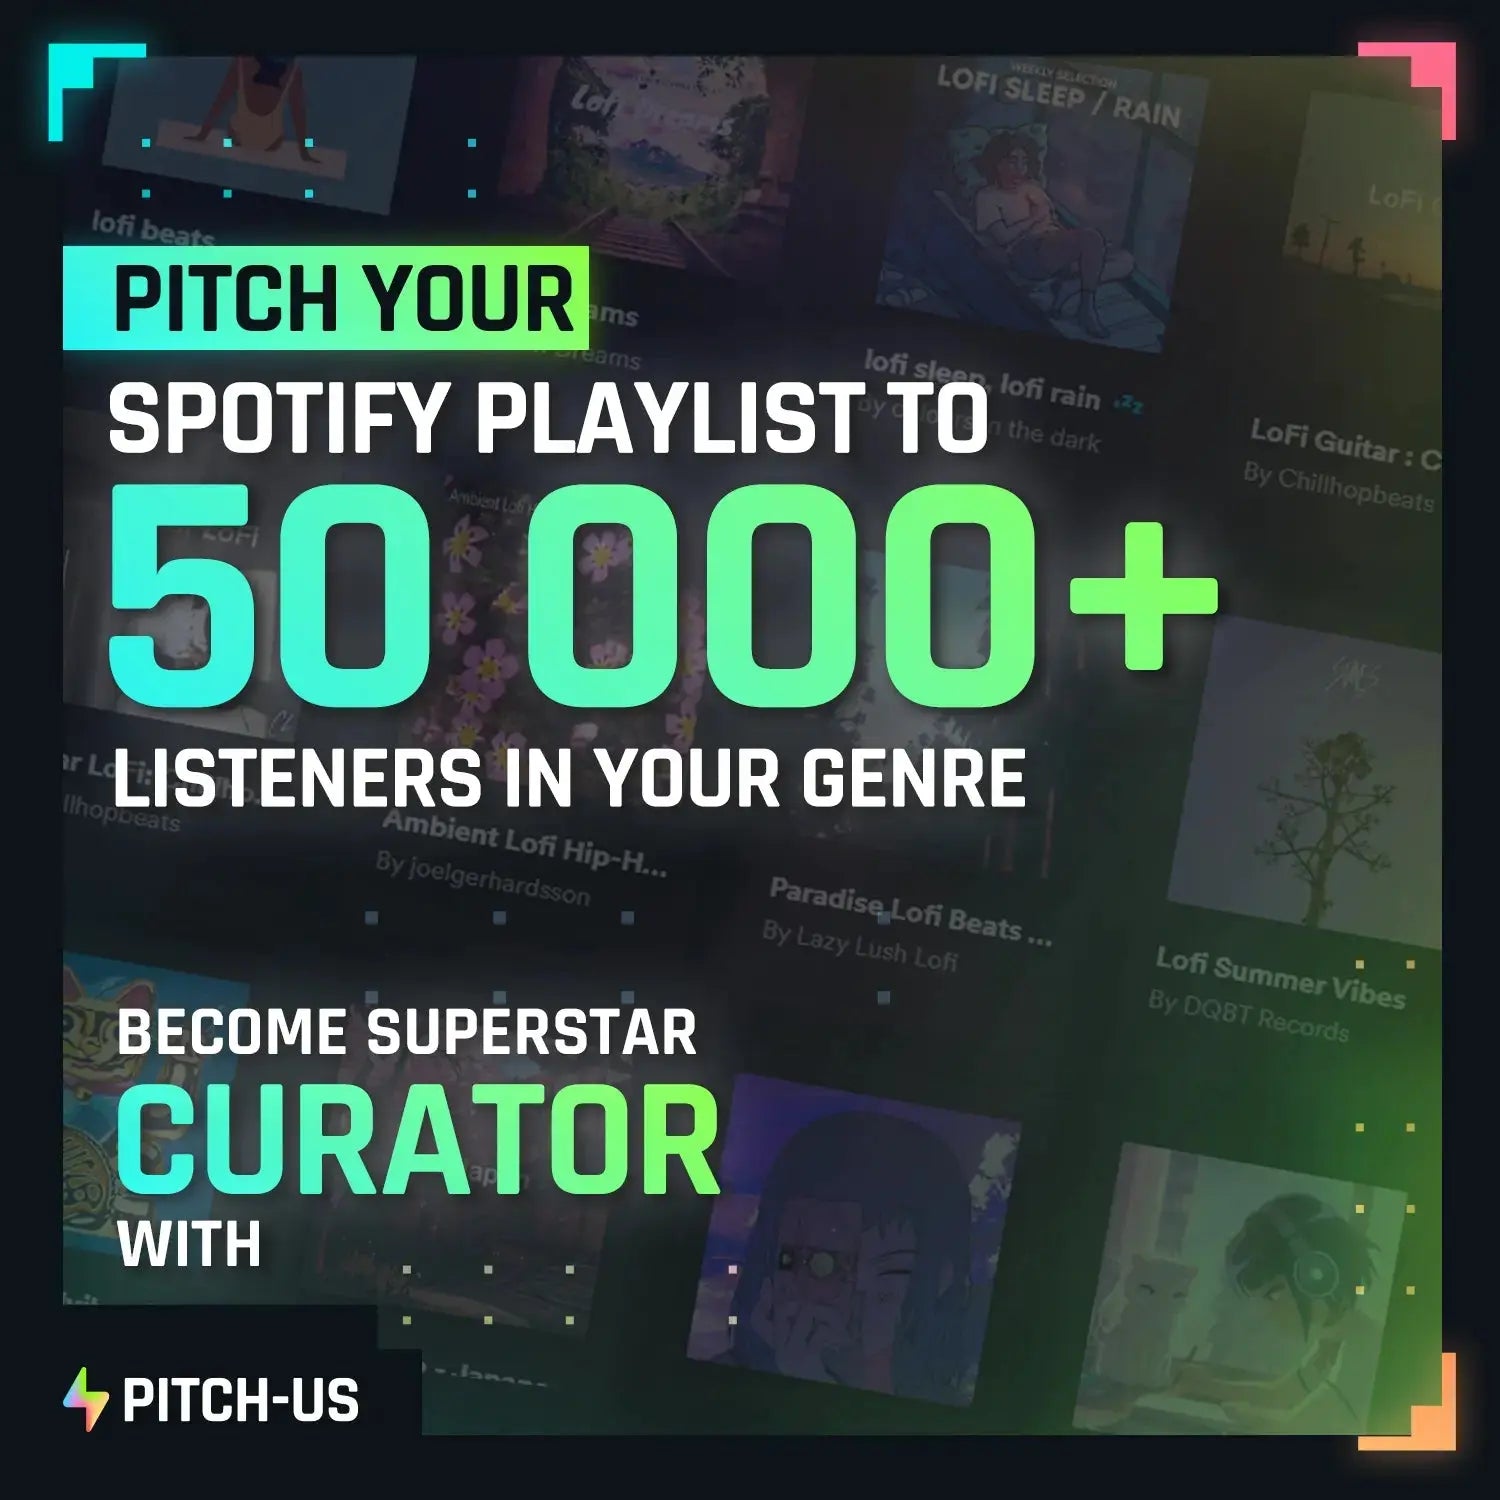 Pitch Your Spotify Playlist to 50,000 Listeners Pitch-Us